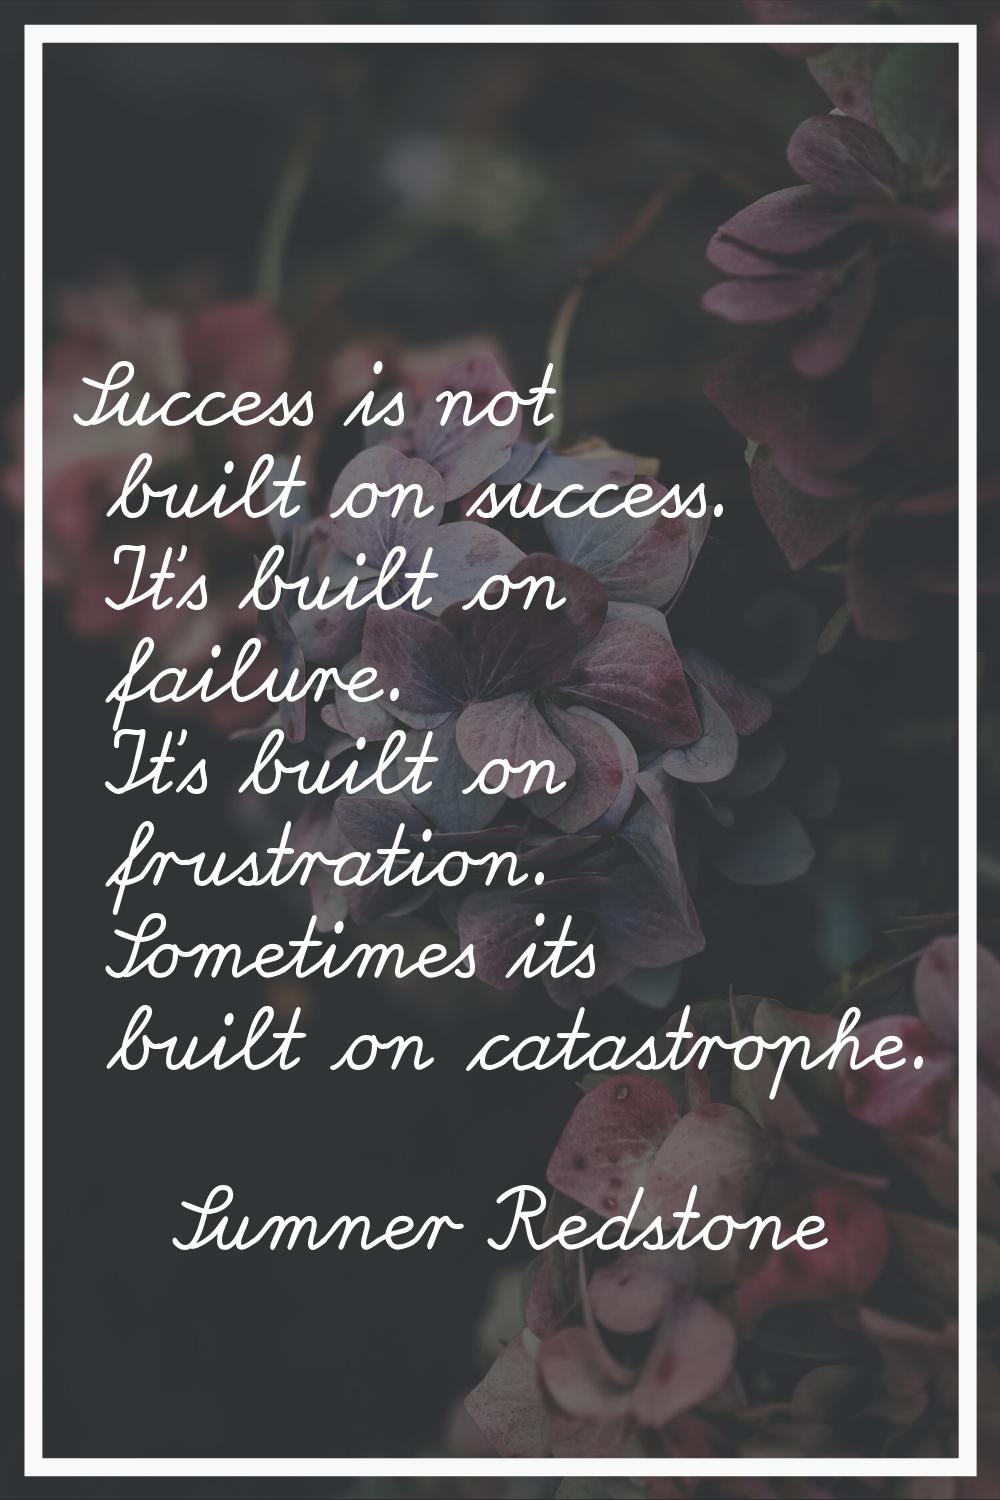 Success is not built on success. It's built on failure. It's built on frustration. Sometimes its bu